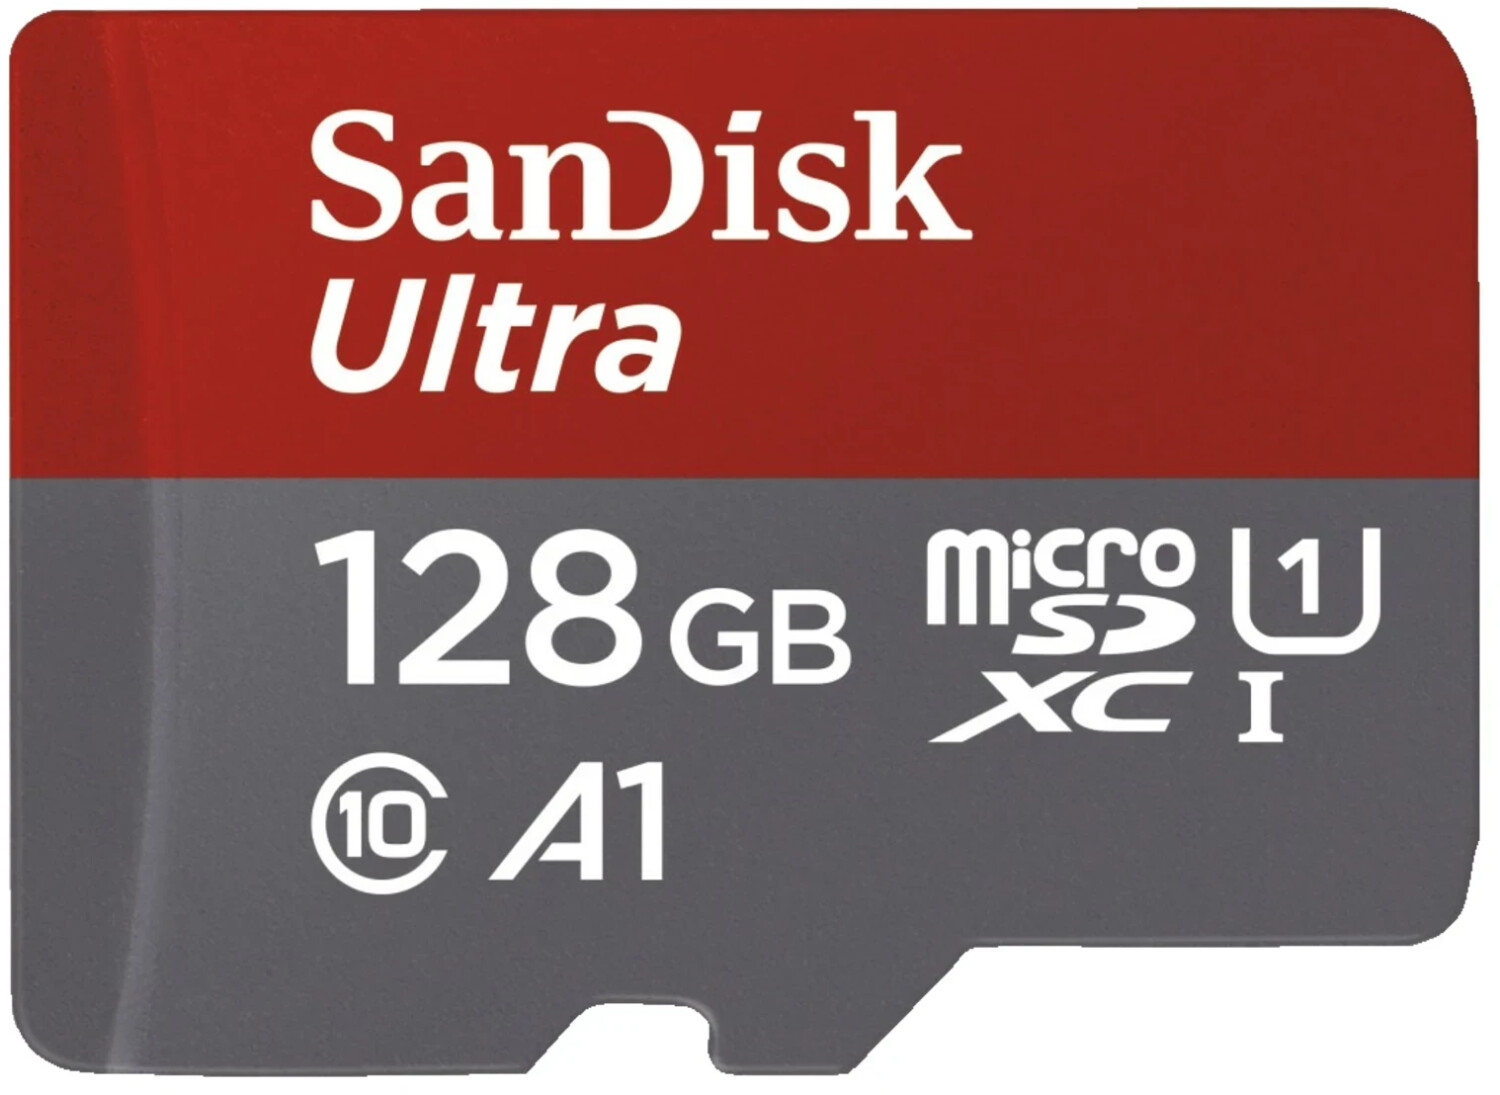 SanDisk Ultra Clé USB 3.0 64 Go Rouge pas cher - HardWare.fr